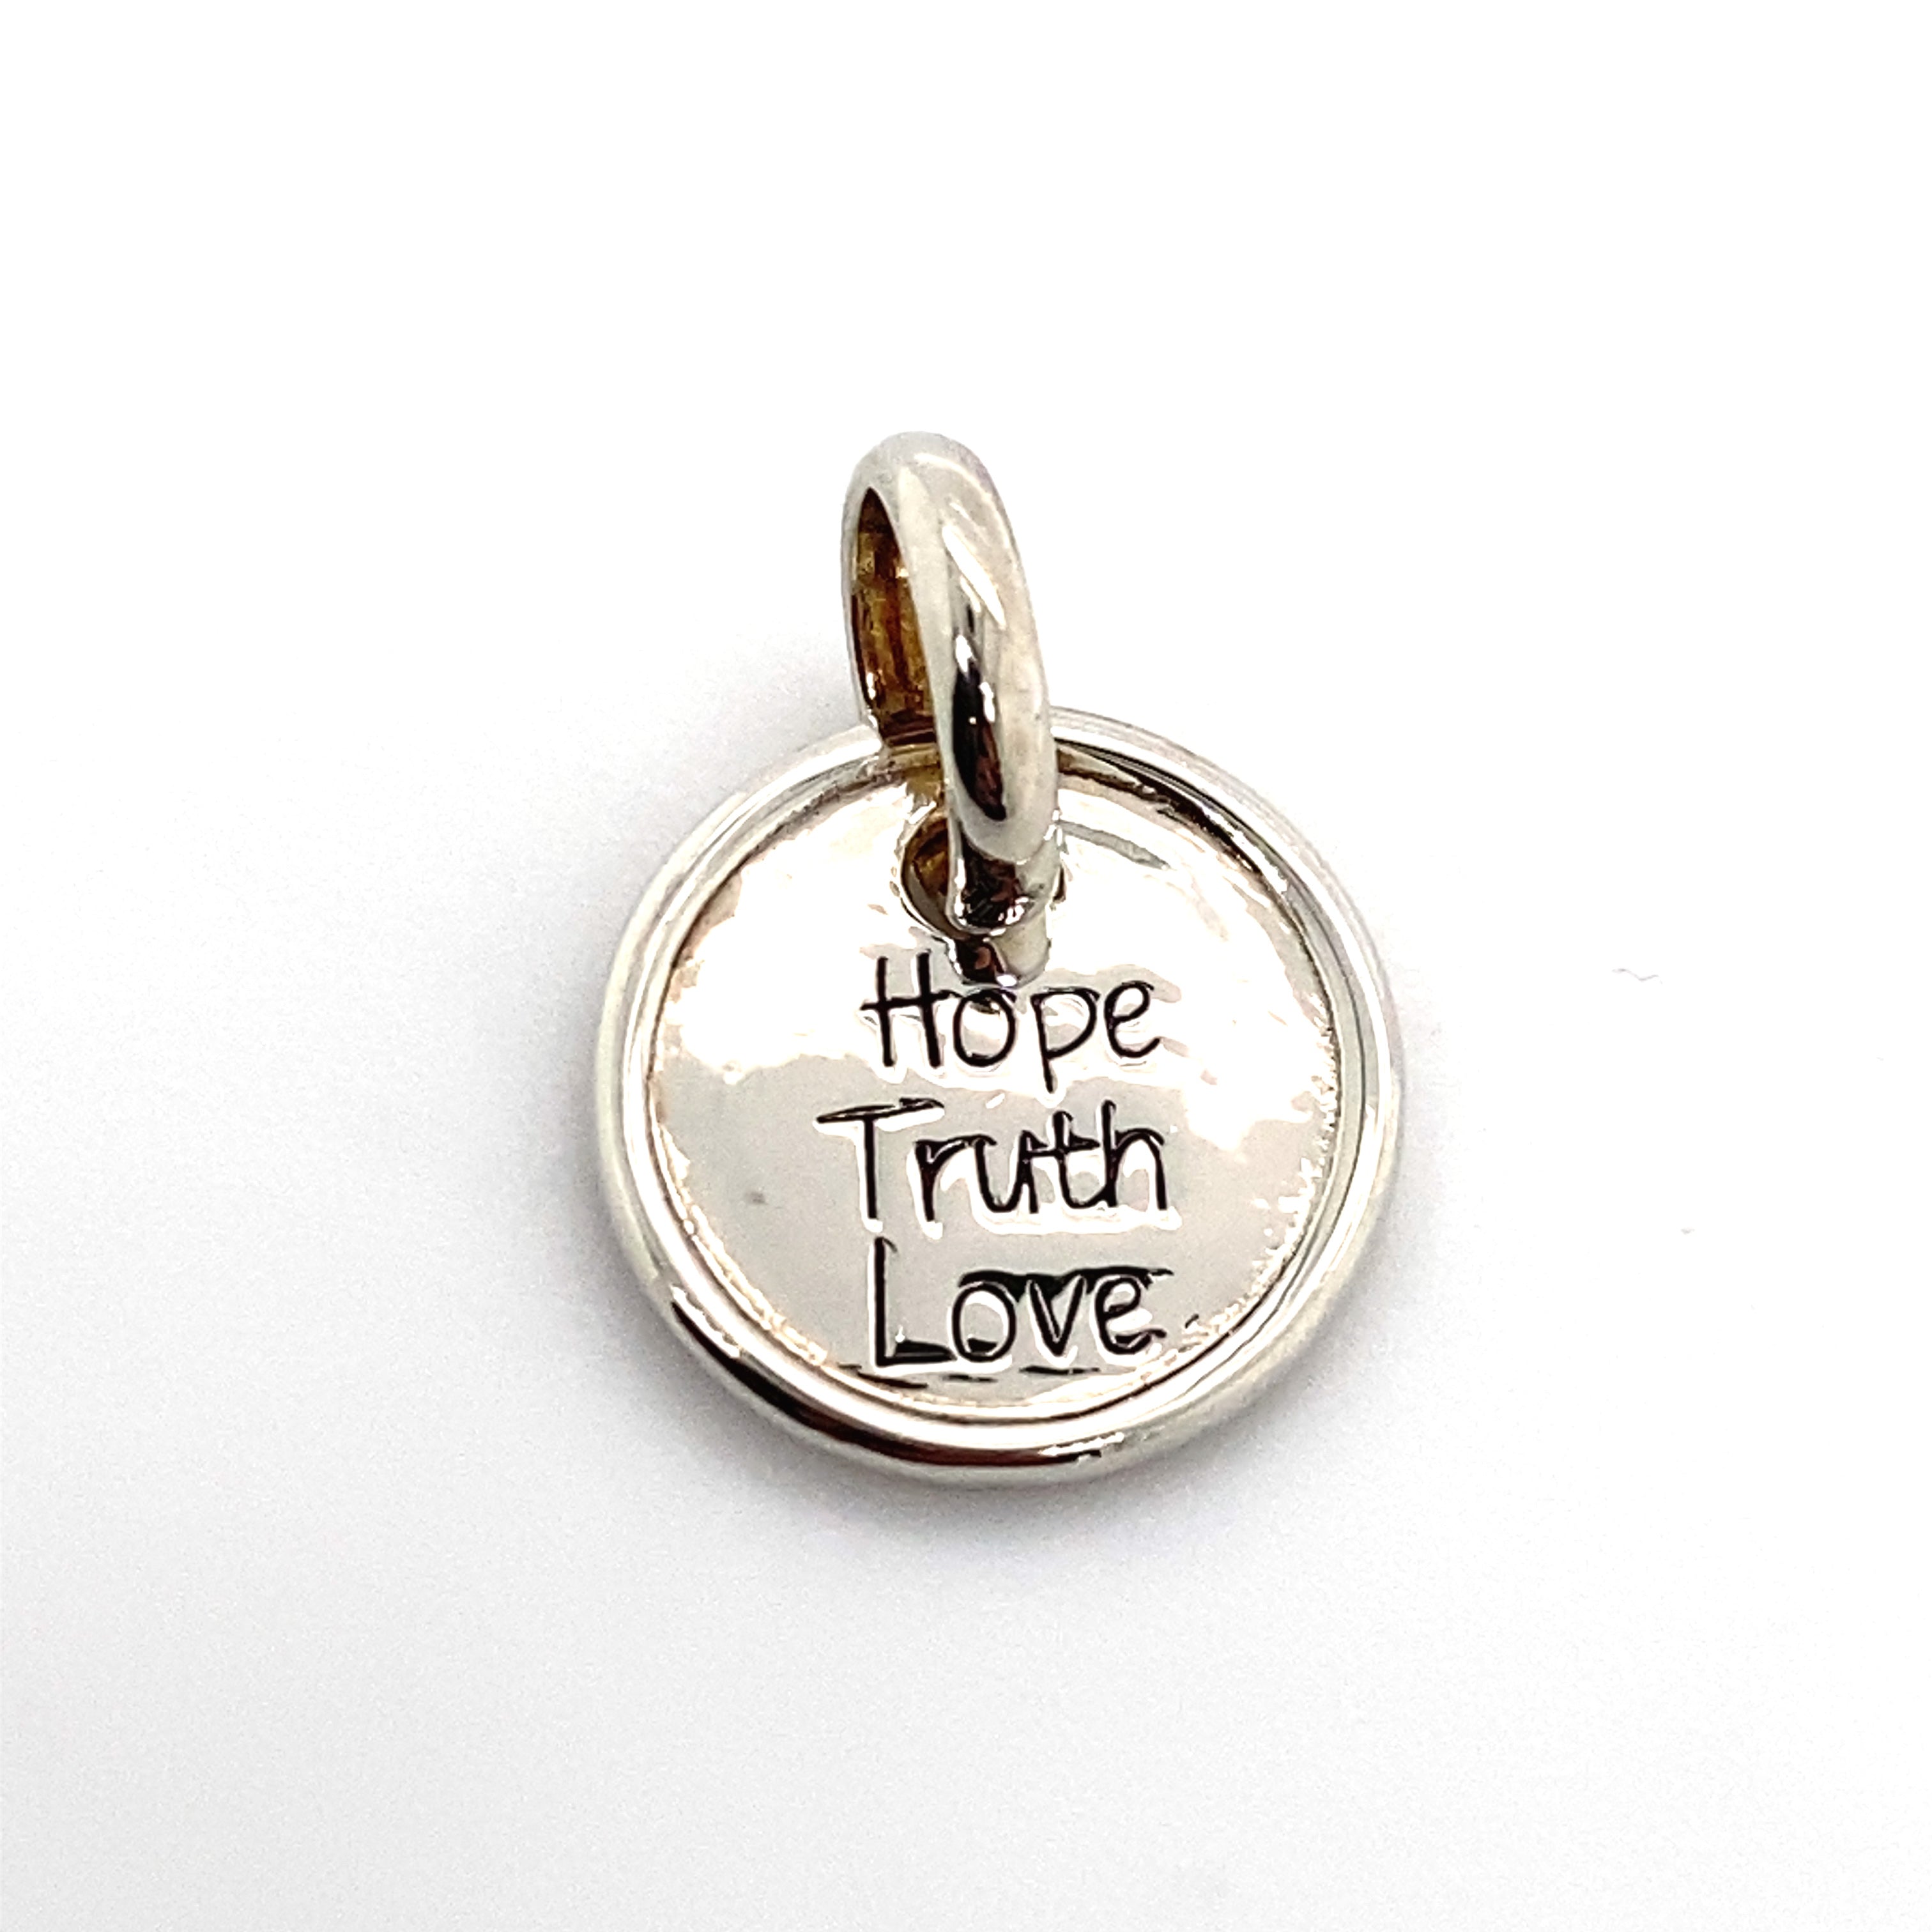 hope truth love pendant charm